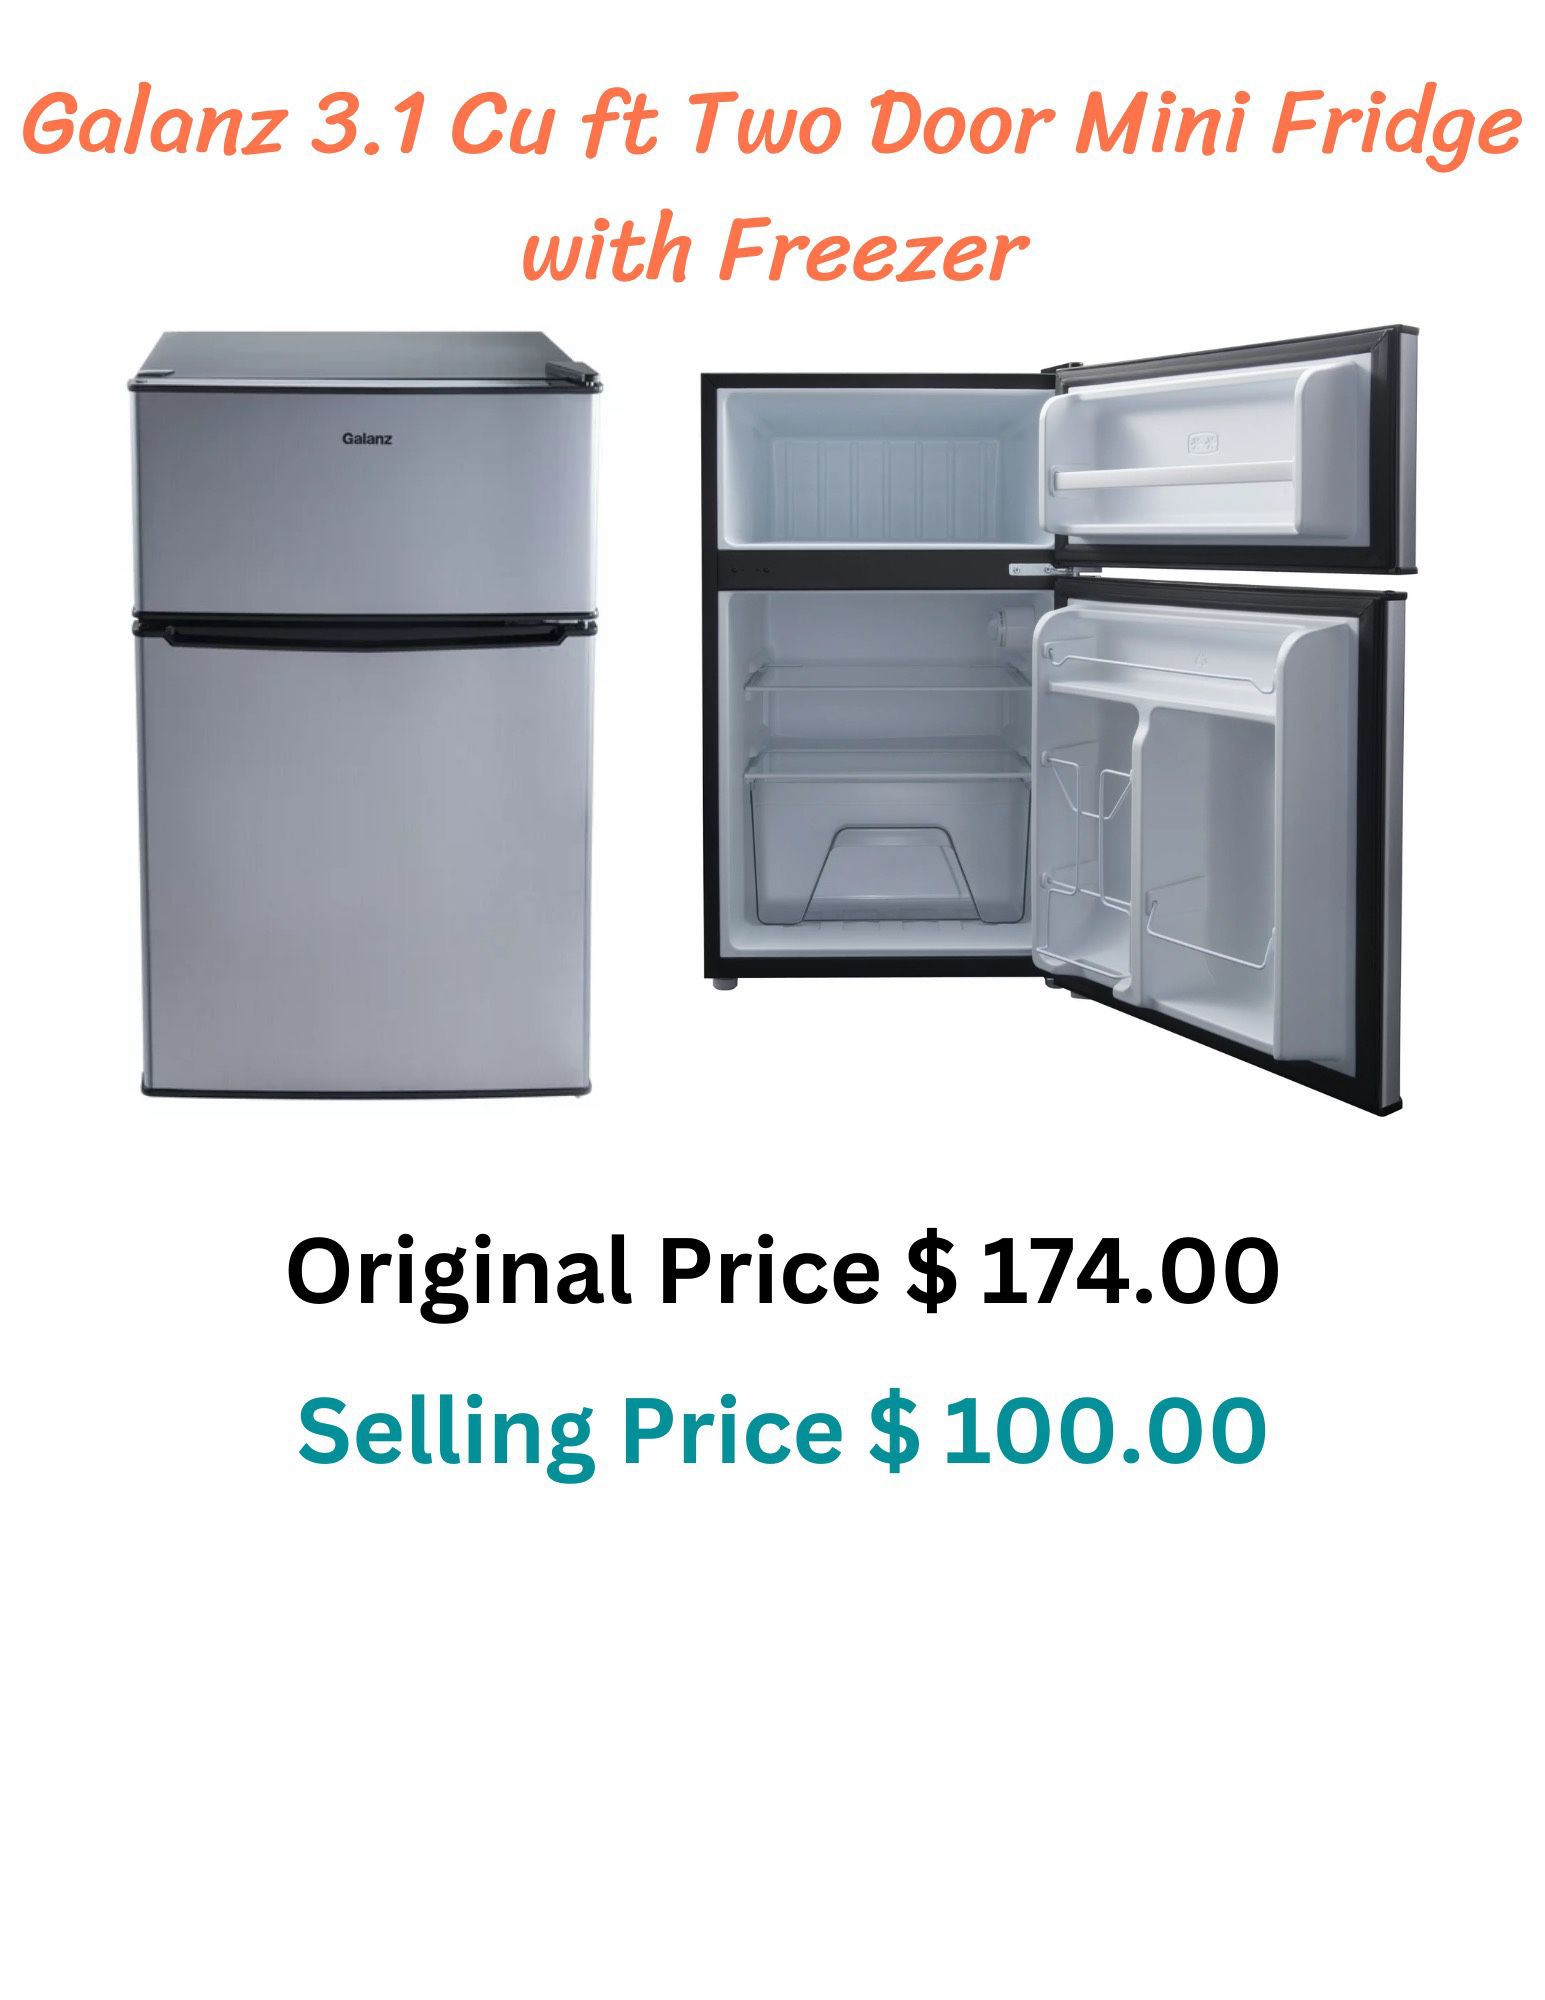 Mini Fridge and Freezer